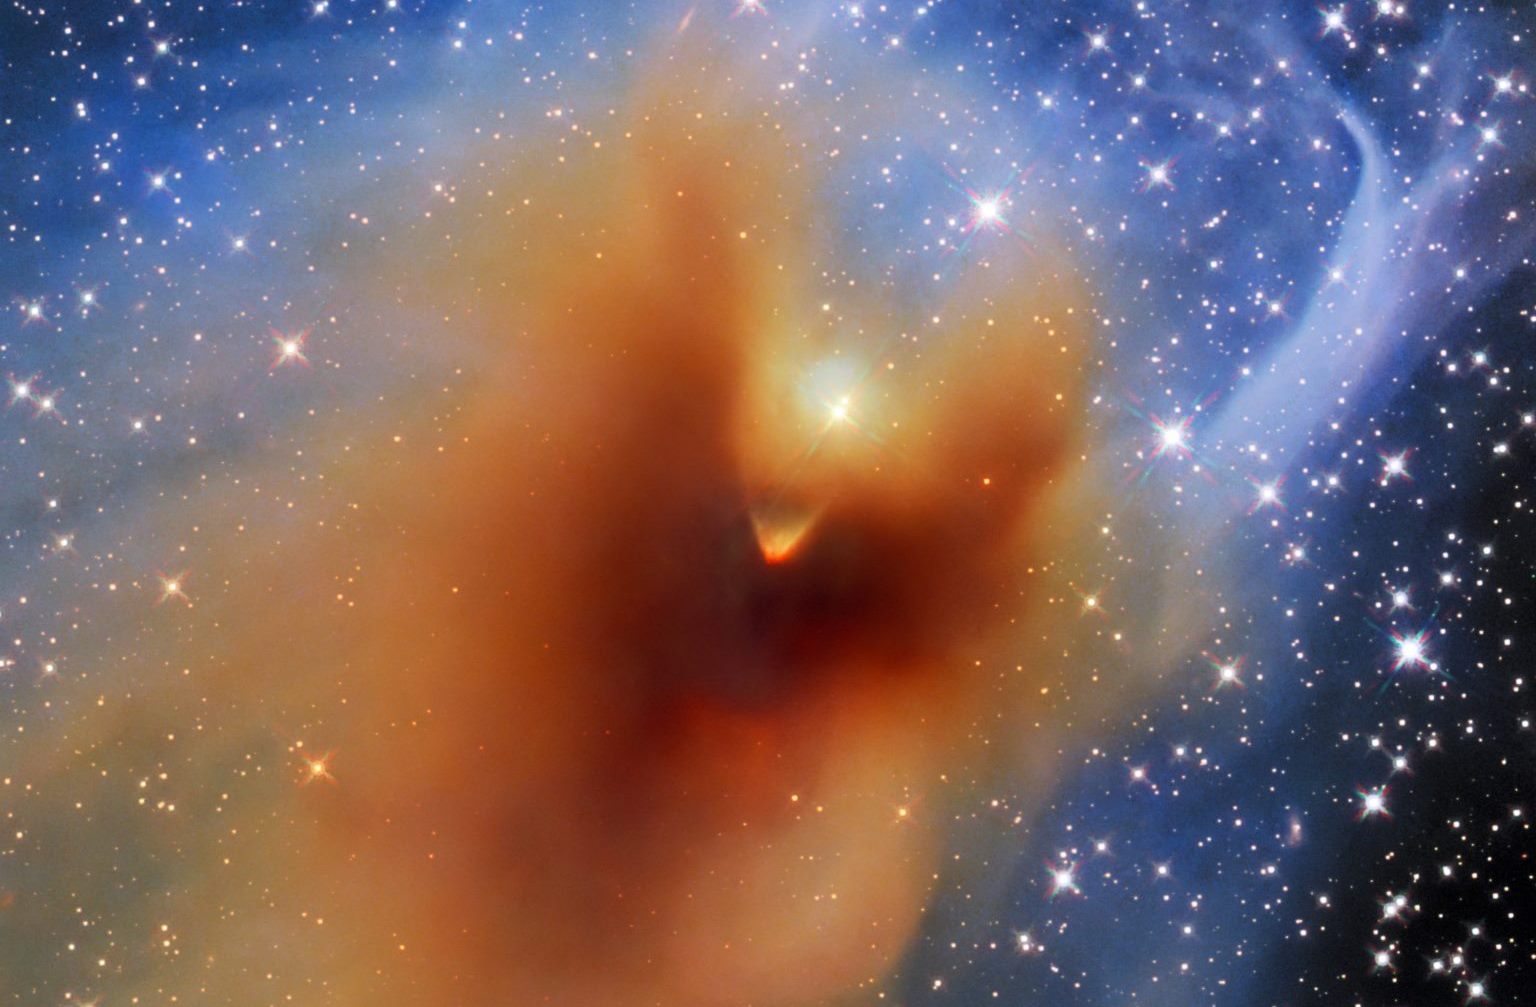 Zvjezdani rasadnik CB 130-3. Izvor: ESA/Hubble, NASA & STScI, C. Britt, T. Huard, A. Pagan.